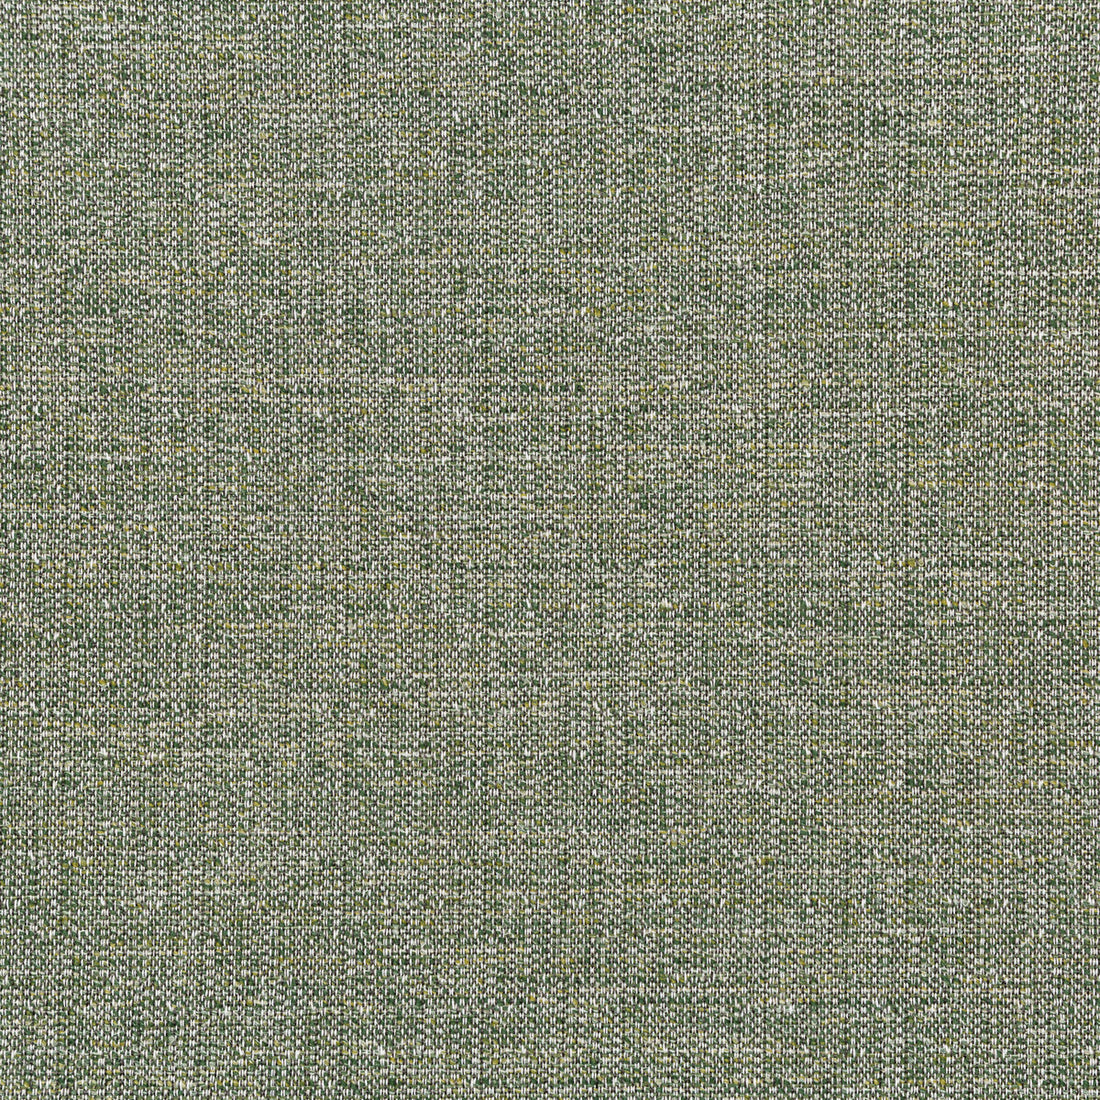 Kravet Smart fabric in 35970-3 color - pattern 35970.3.0 - by Kravet Smart in the Performance Kravetarmor collection